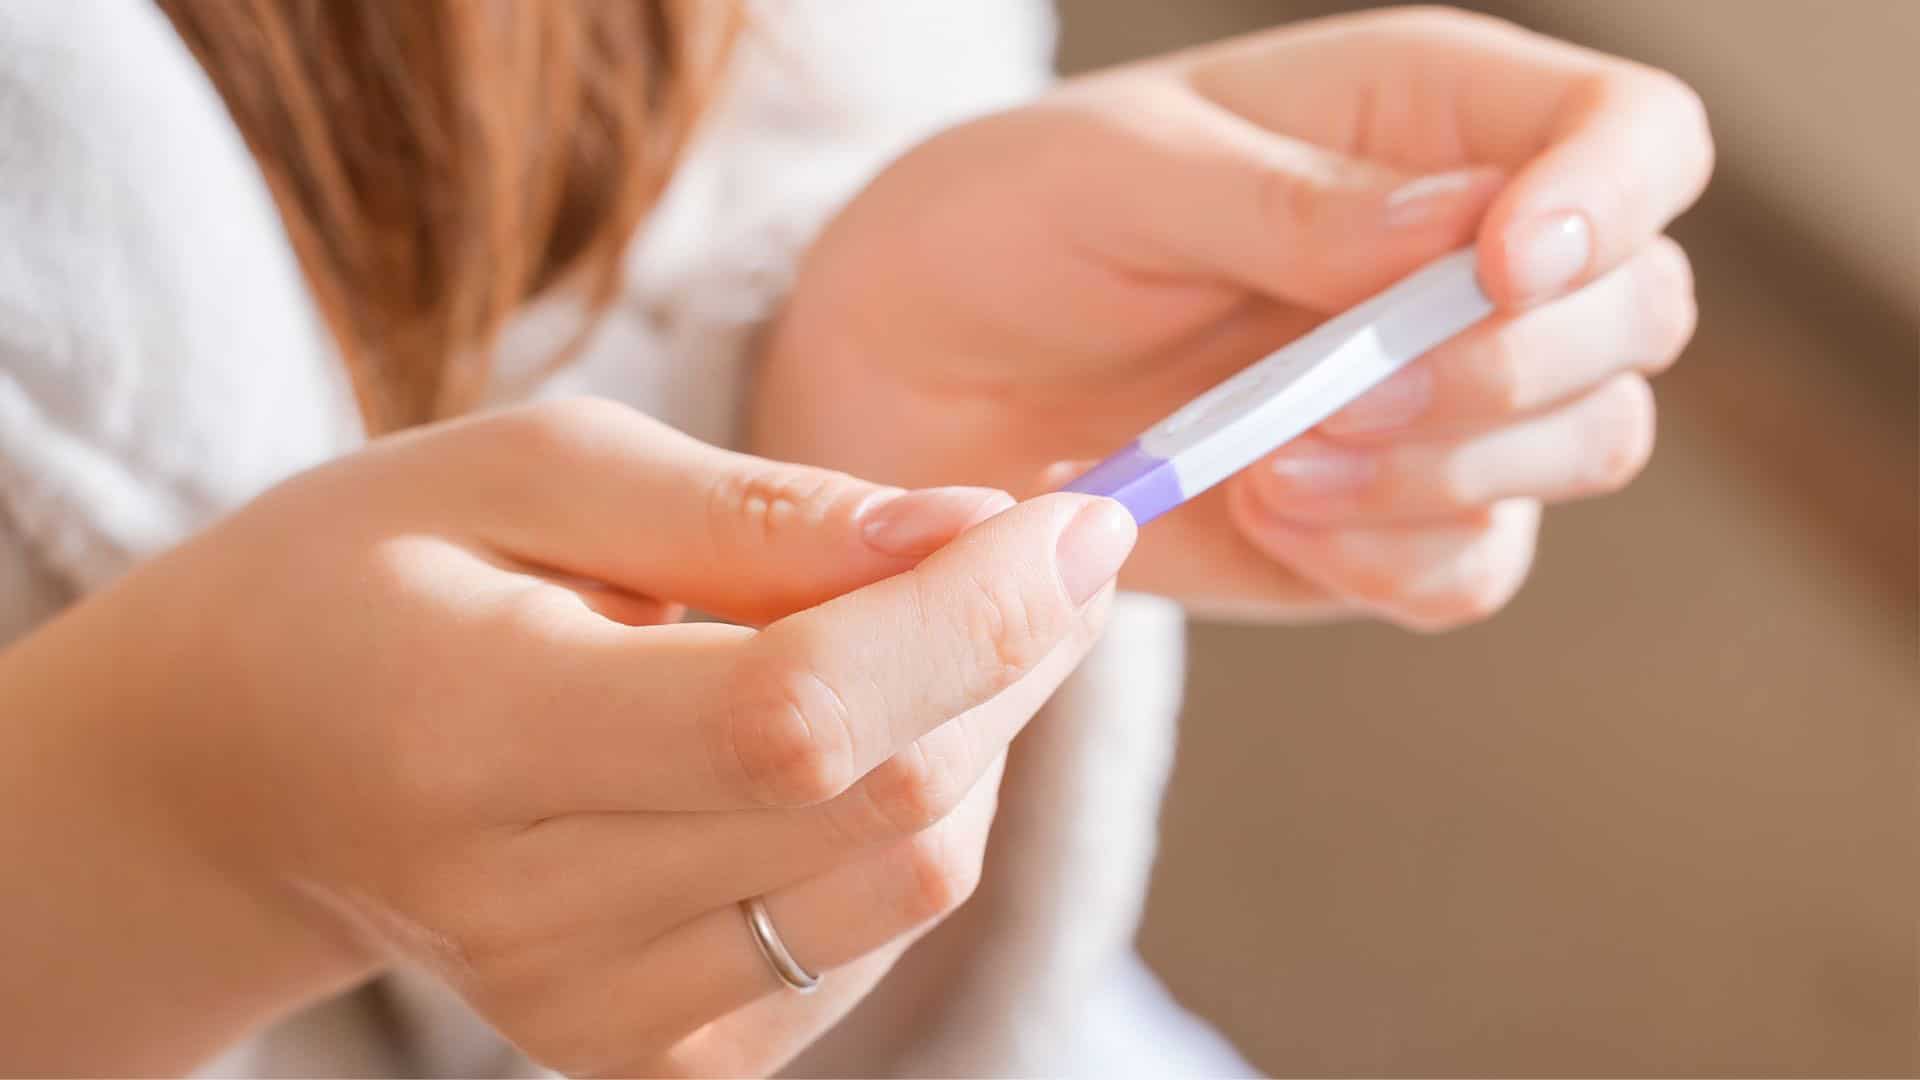 Image showing woman handling pregnancy test